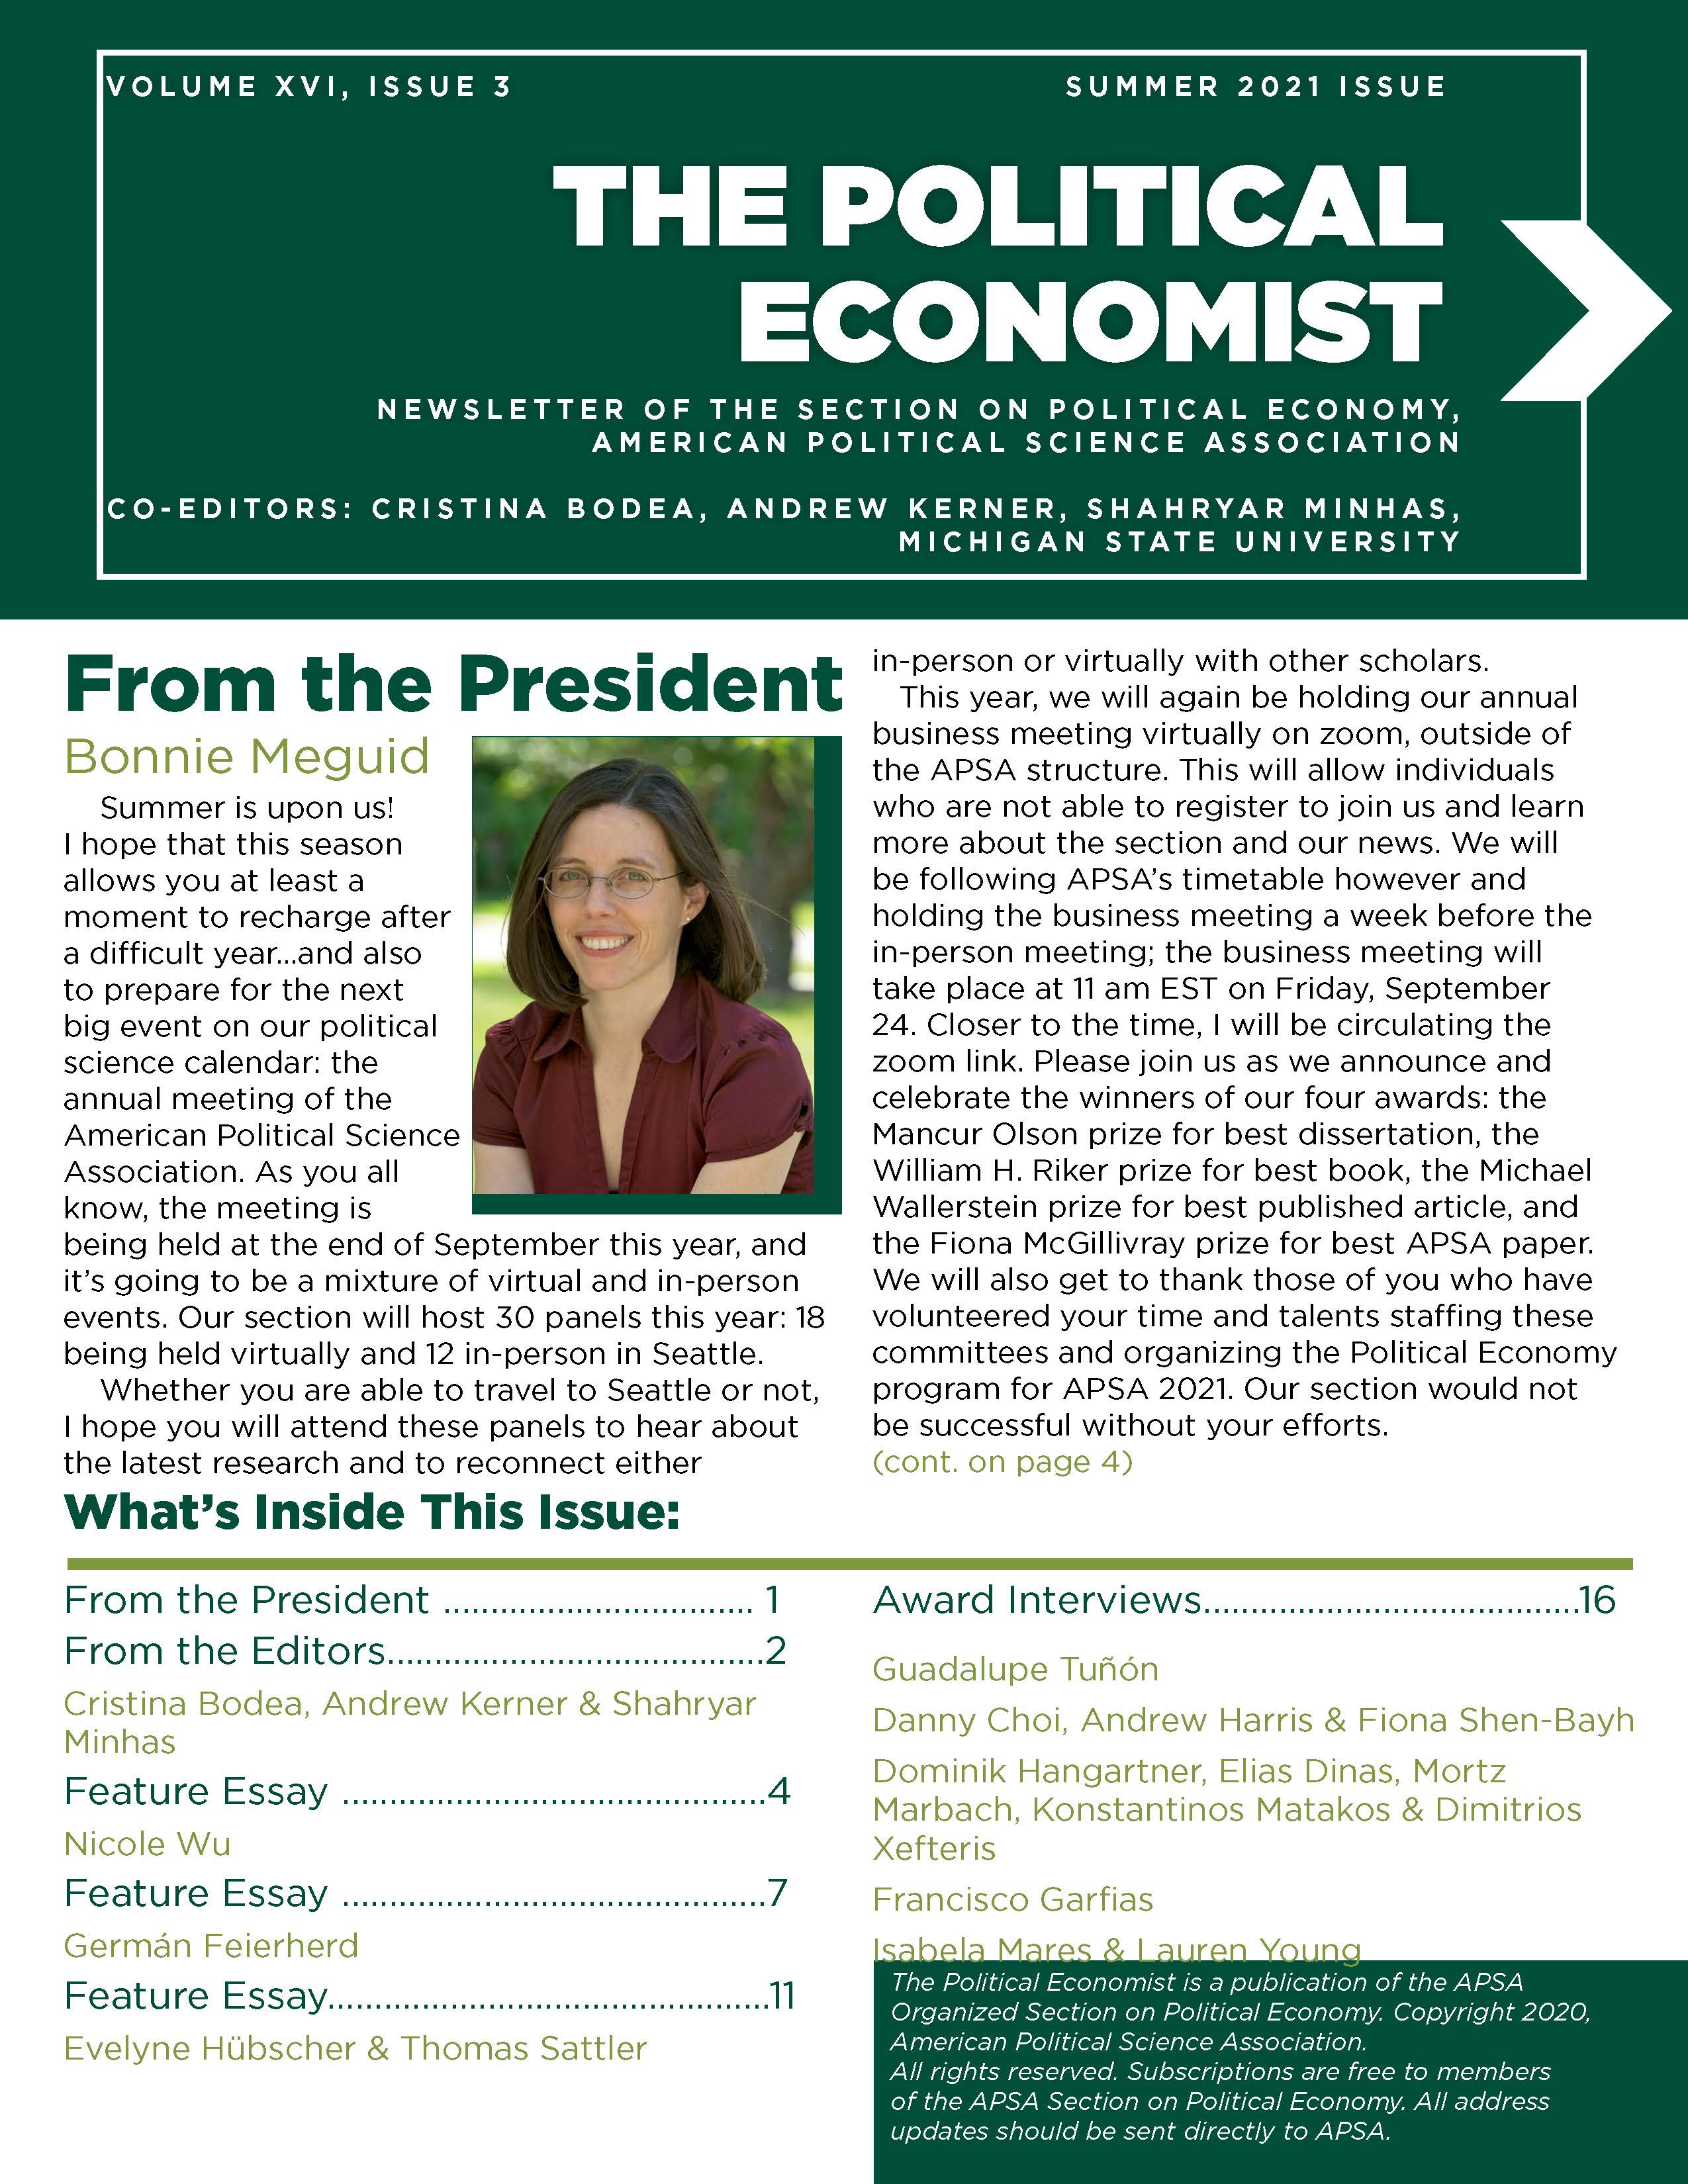 MSU PLS presents the latest Political Economy newsletter